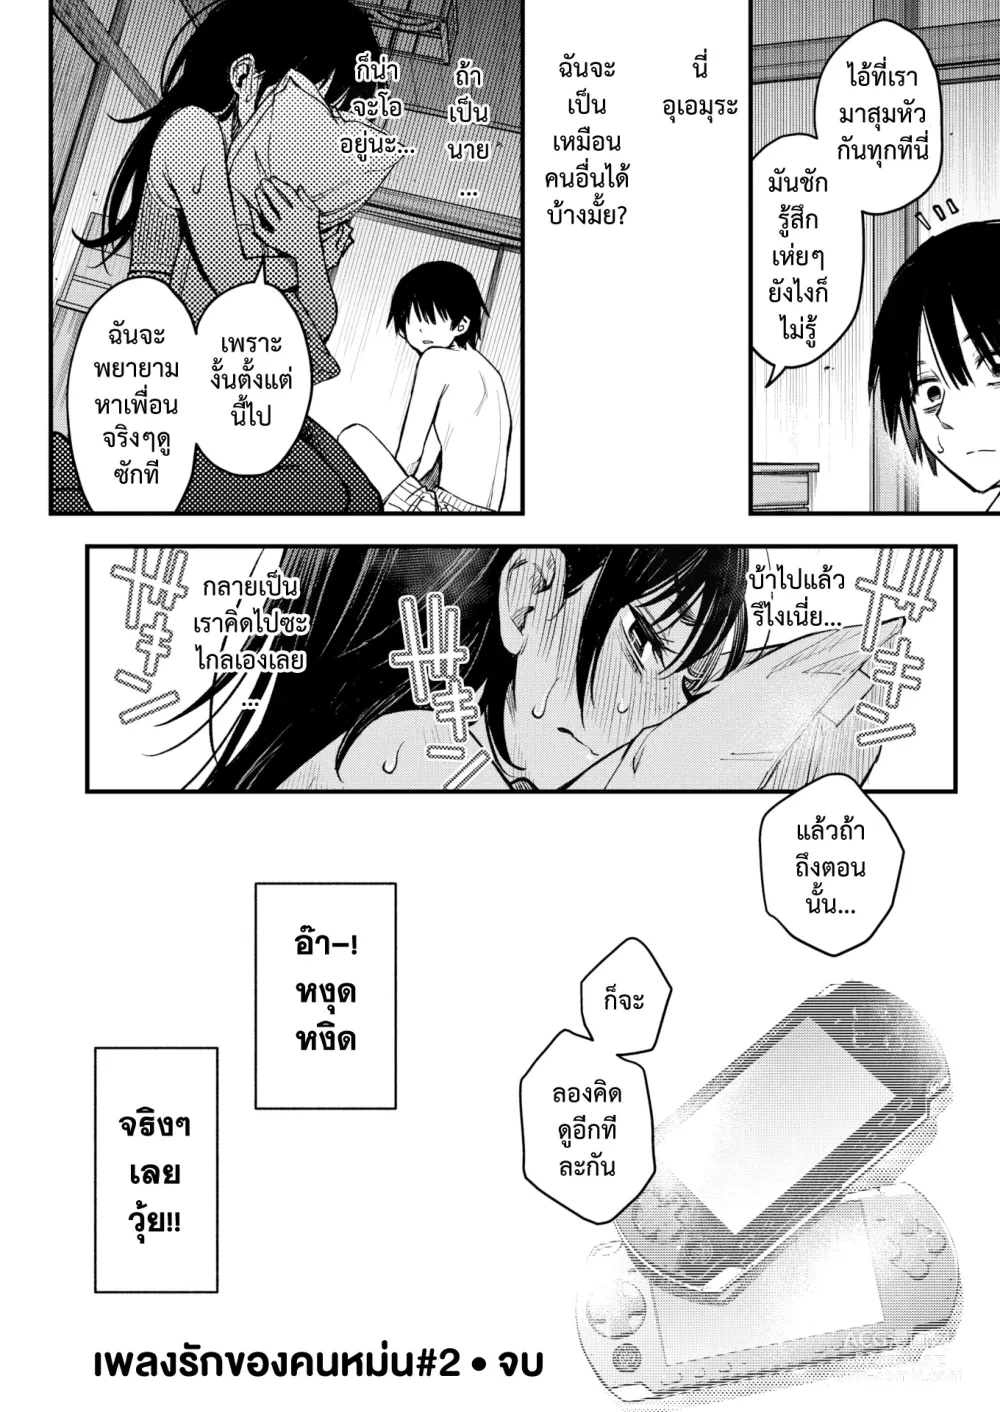 Page 23 of manga เพลงรักของคนหม่น #2 -บทอามาโนะ ยุยกะ-